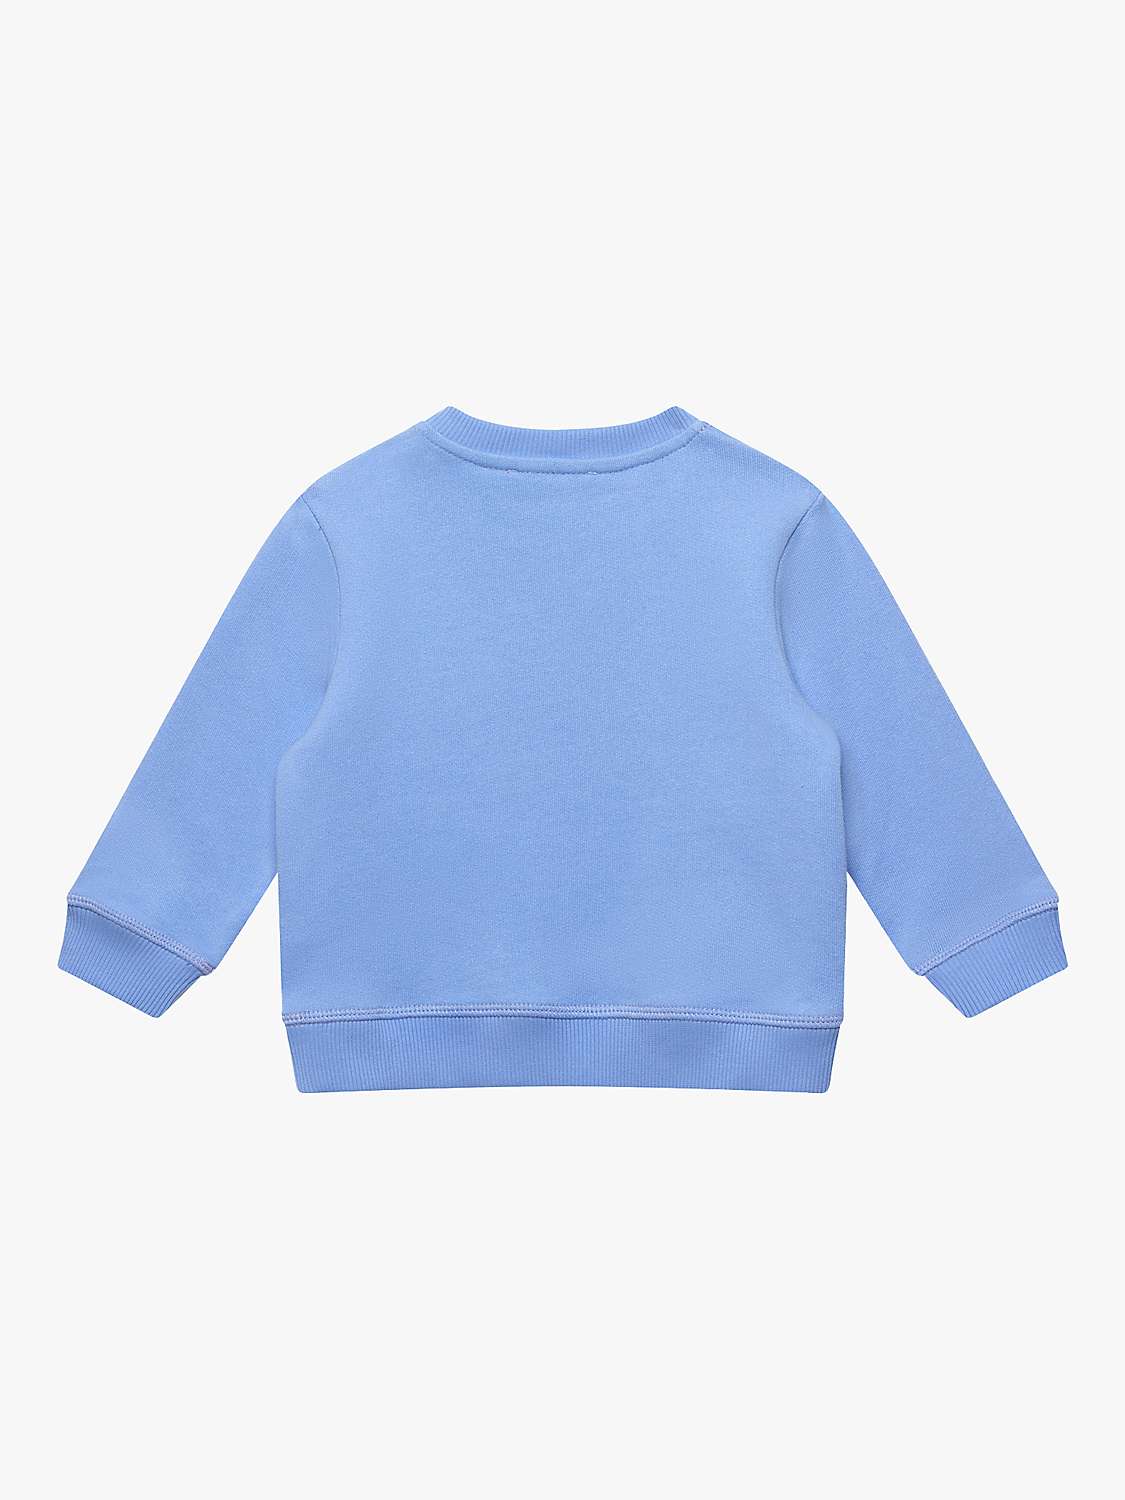 Buy Trotters Felicite Applique Flower Sweatshirt. Blue Online at johnlewis.com